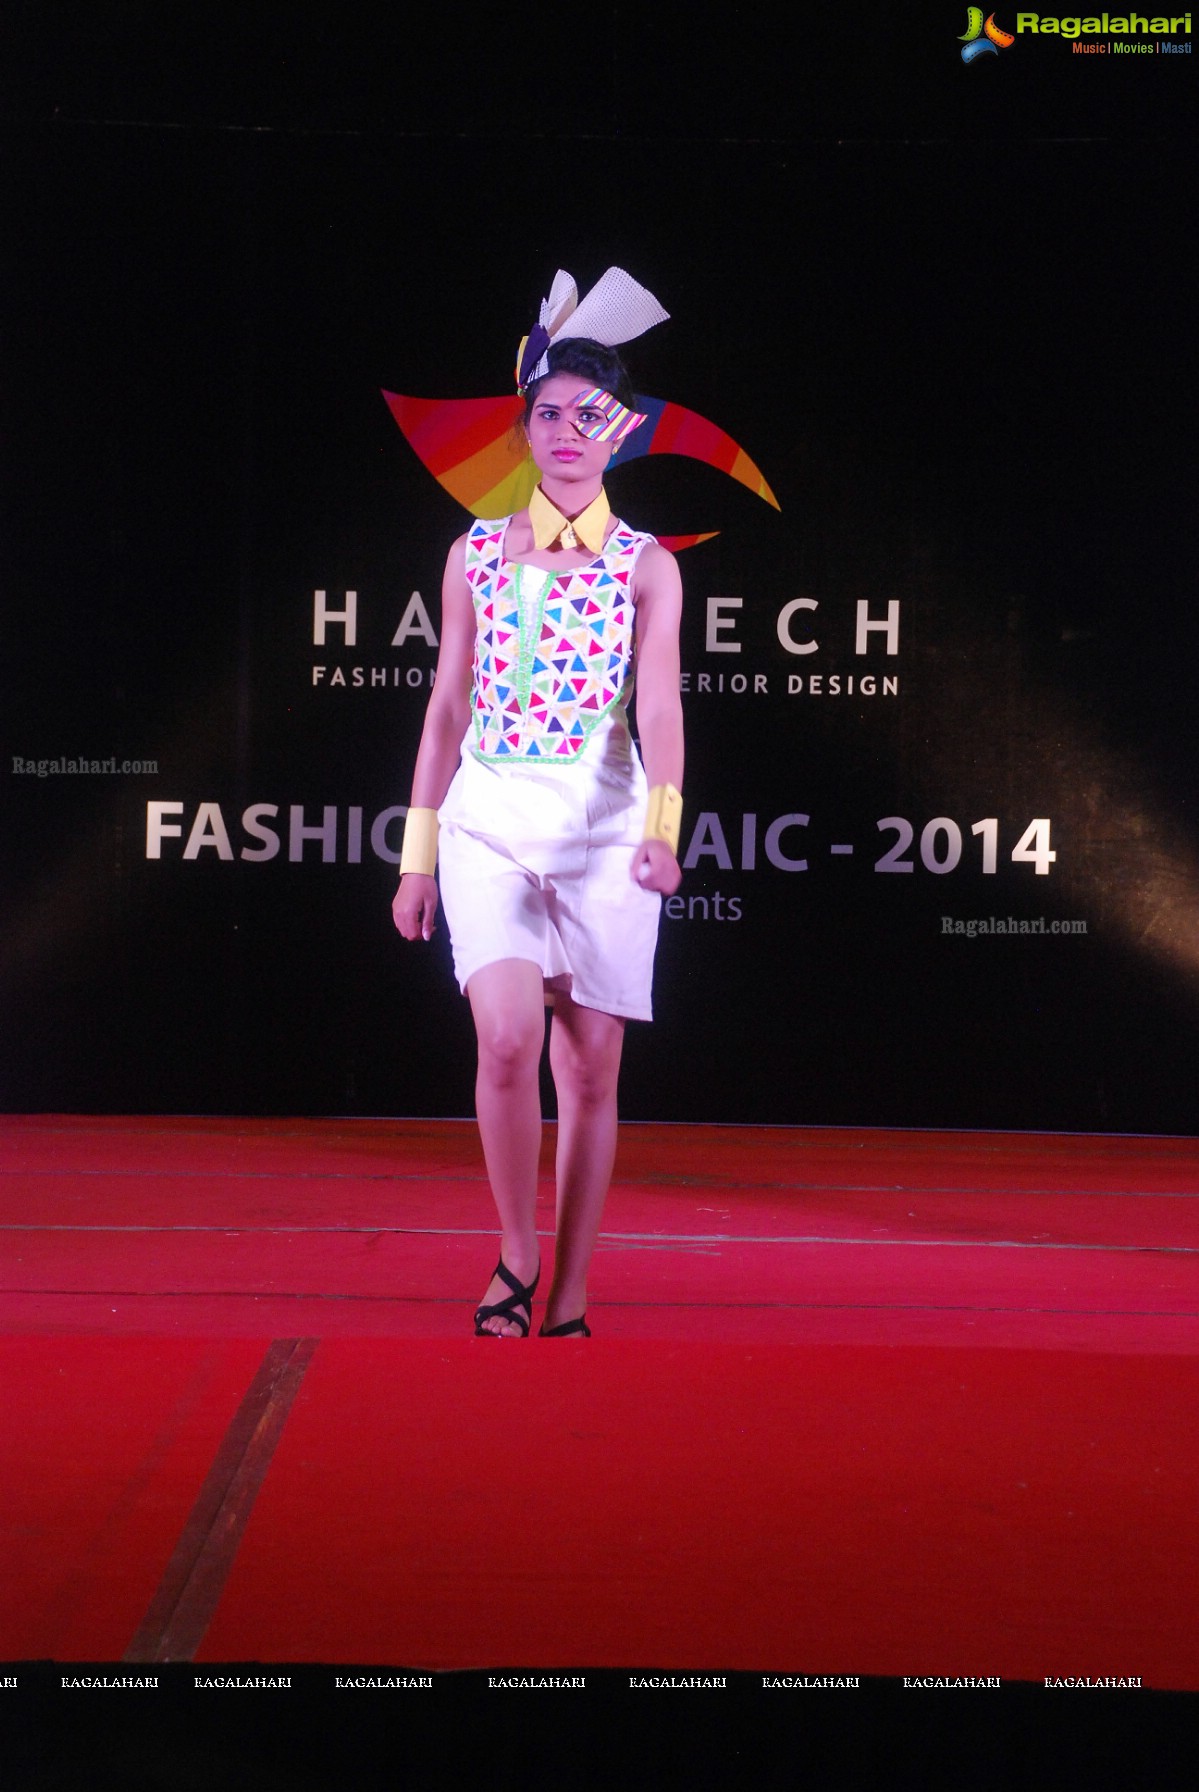 Hamstech Fashion Mosaic 2014